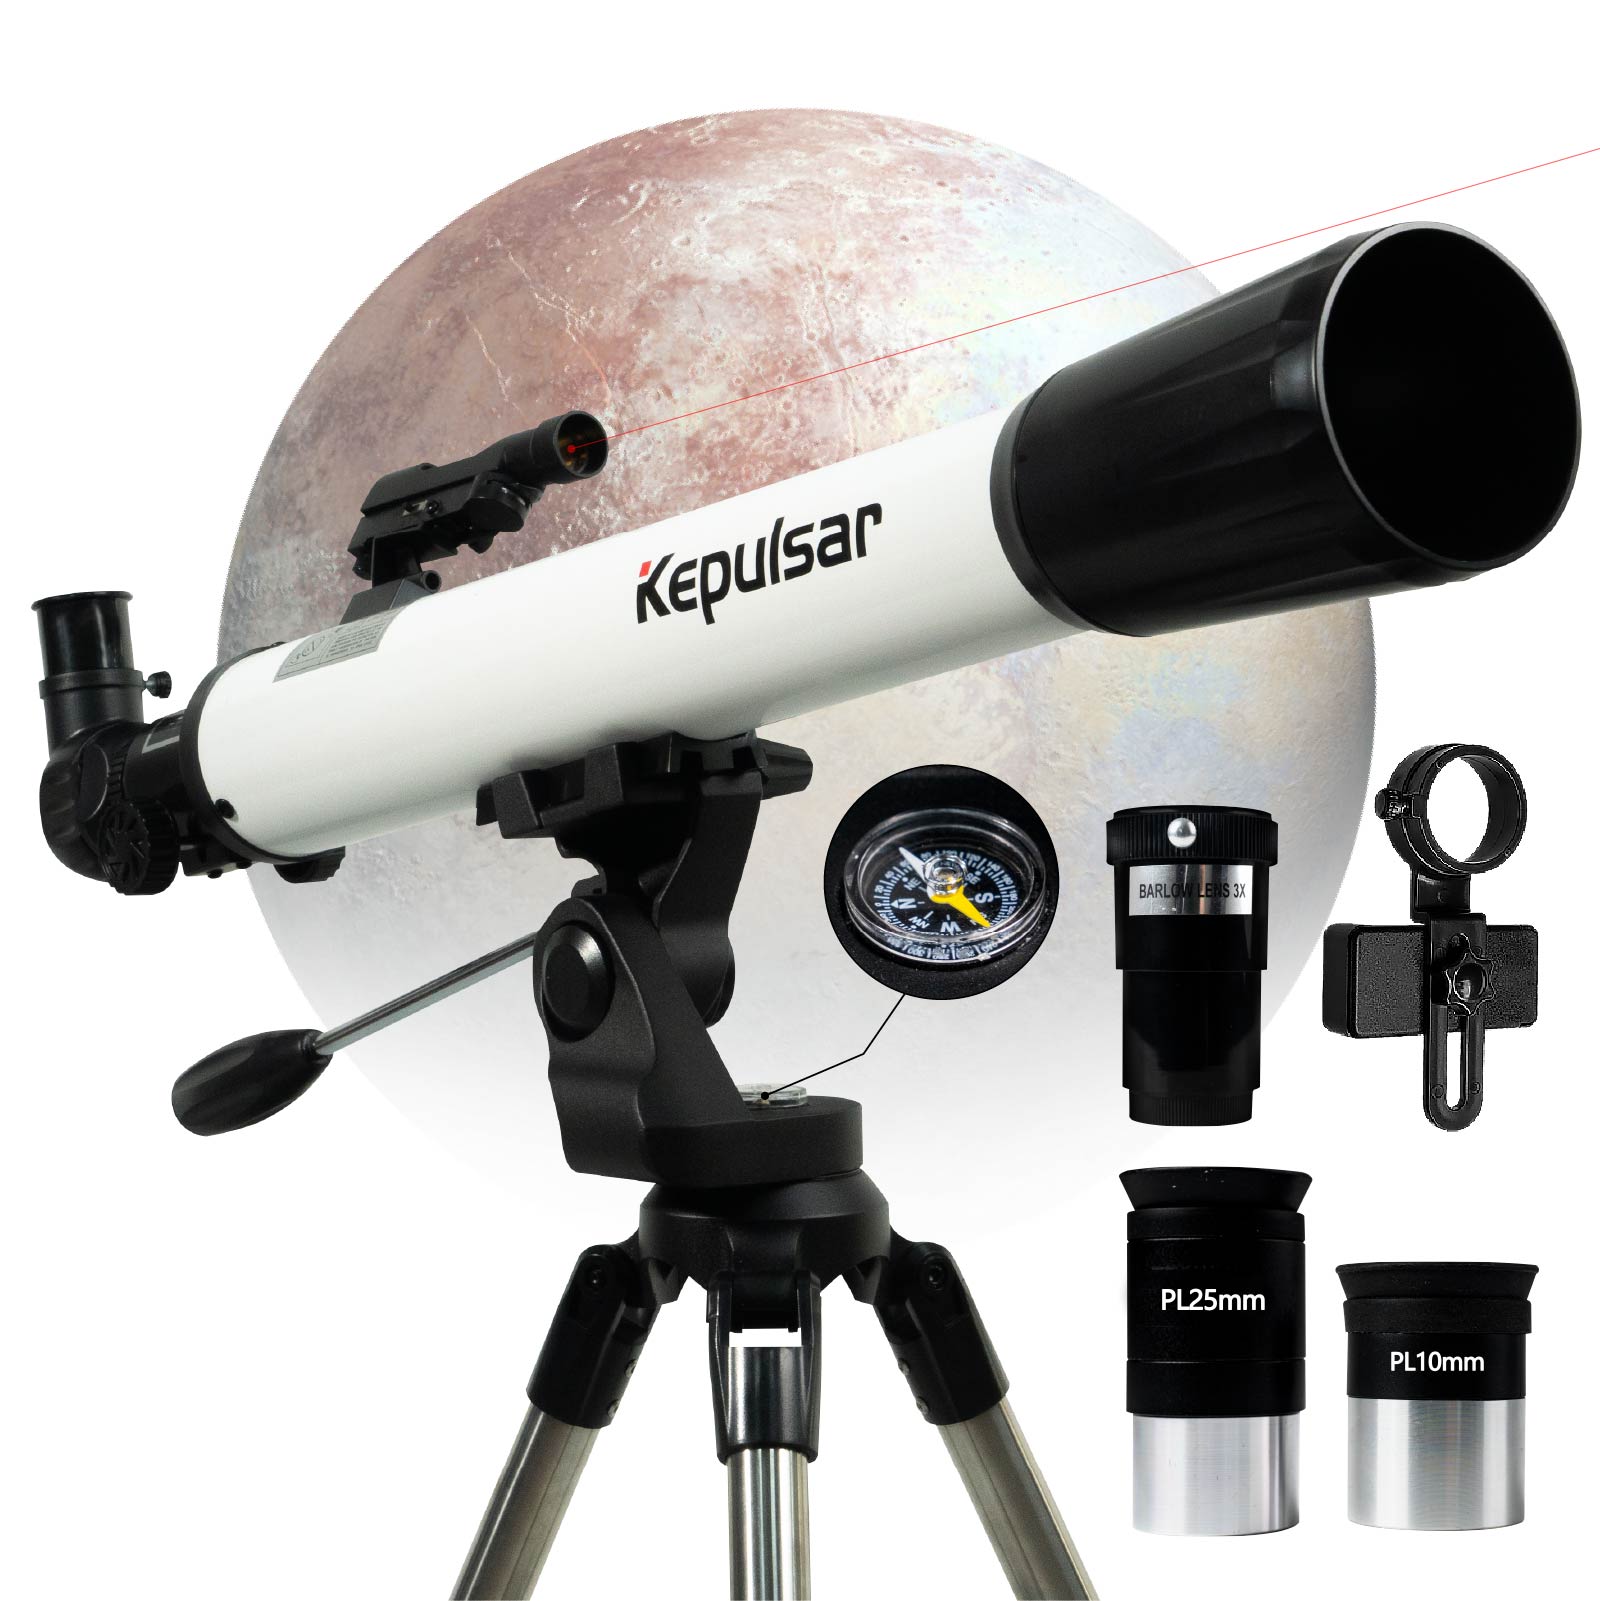 Kepulsar 70mm Refractor Telescope: 2 Eyepieces, 3X Barlow Lens, Fully-Coated Glass Optics